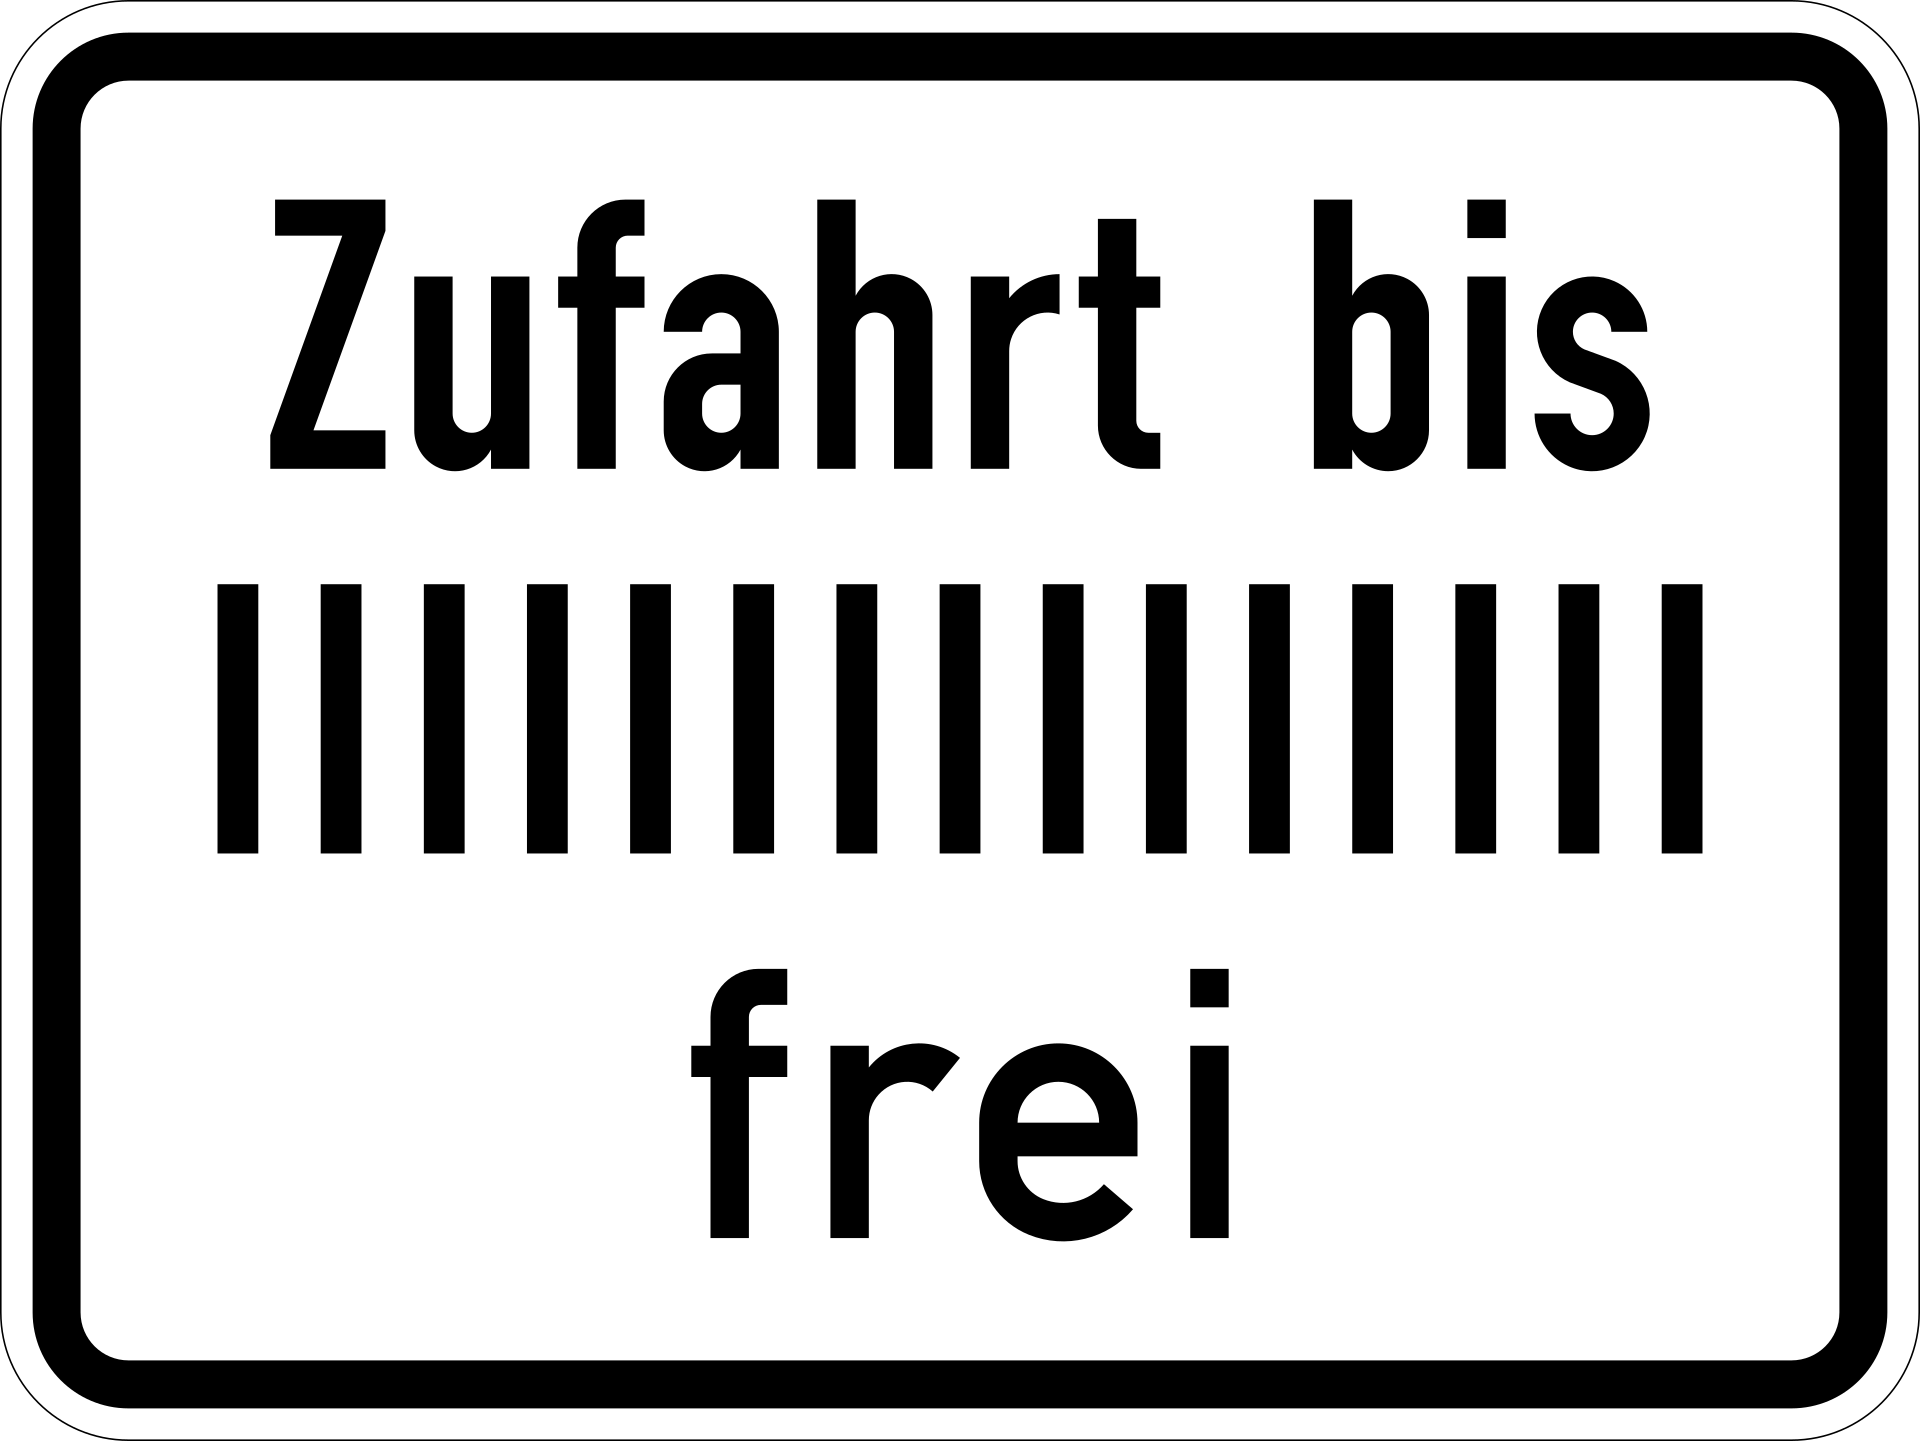 Zufahrt bis … frei frei (VzKat 1028.33)